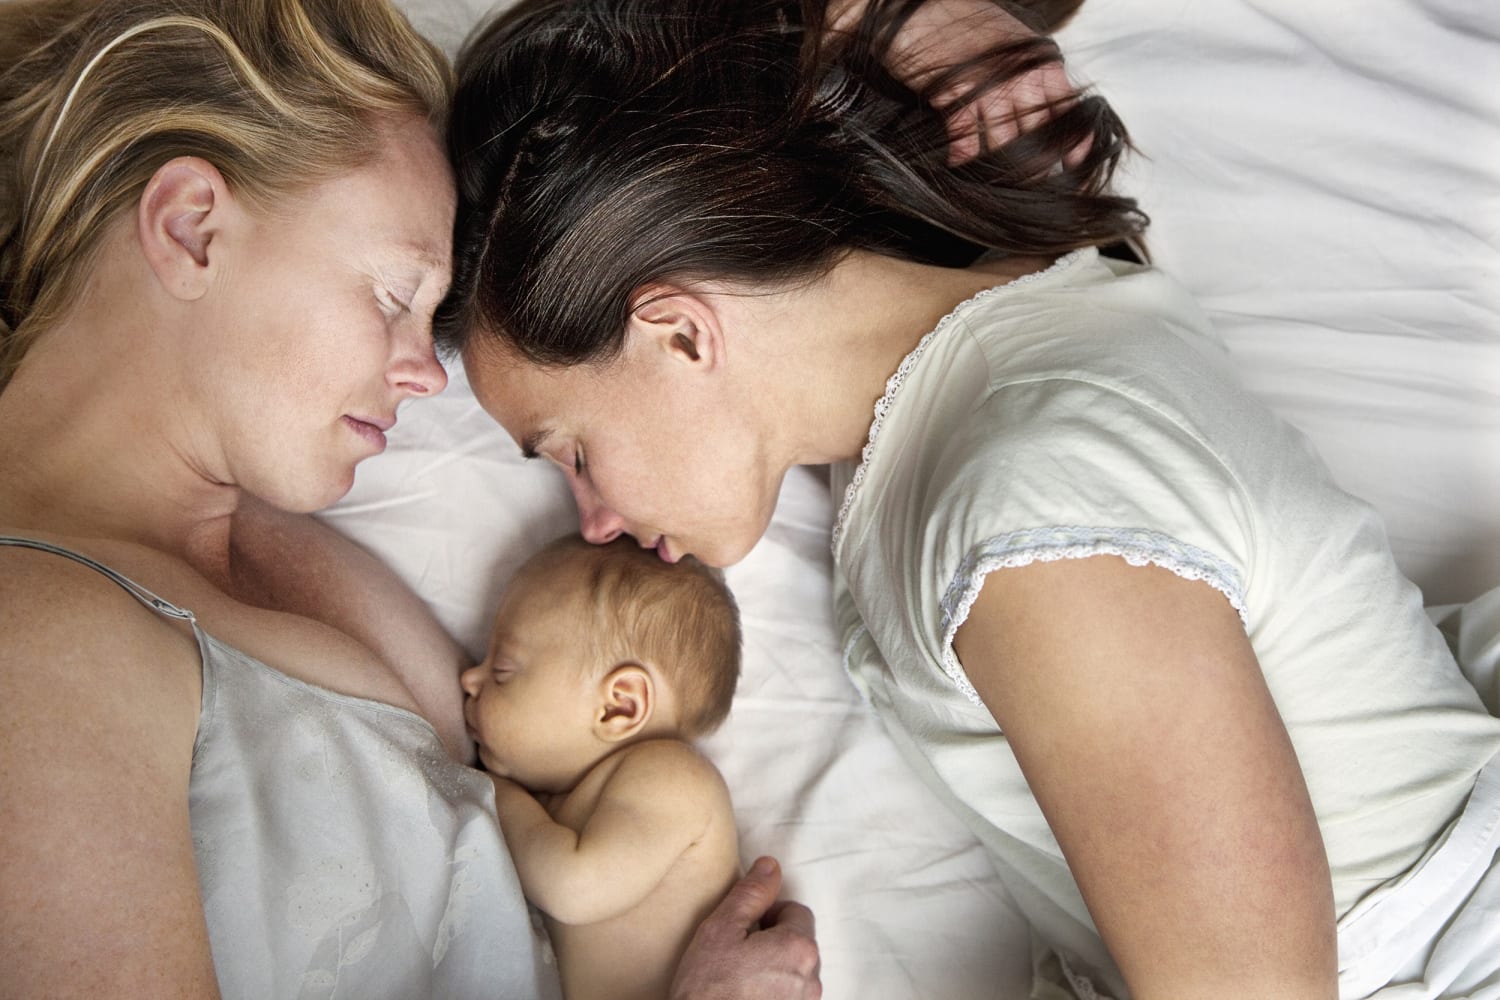 It's Okay to Stop Breastfeeding